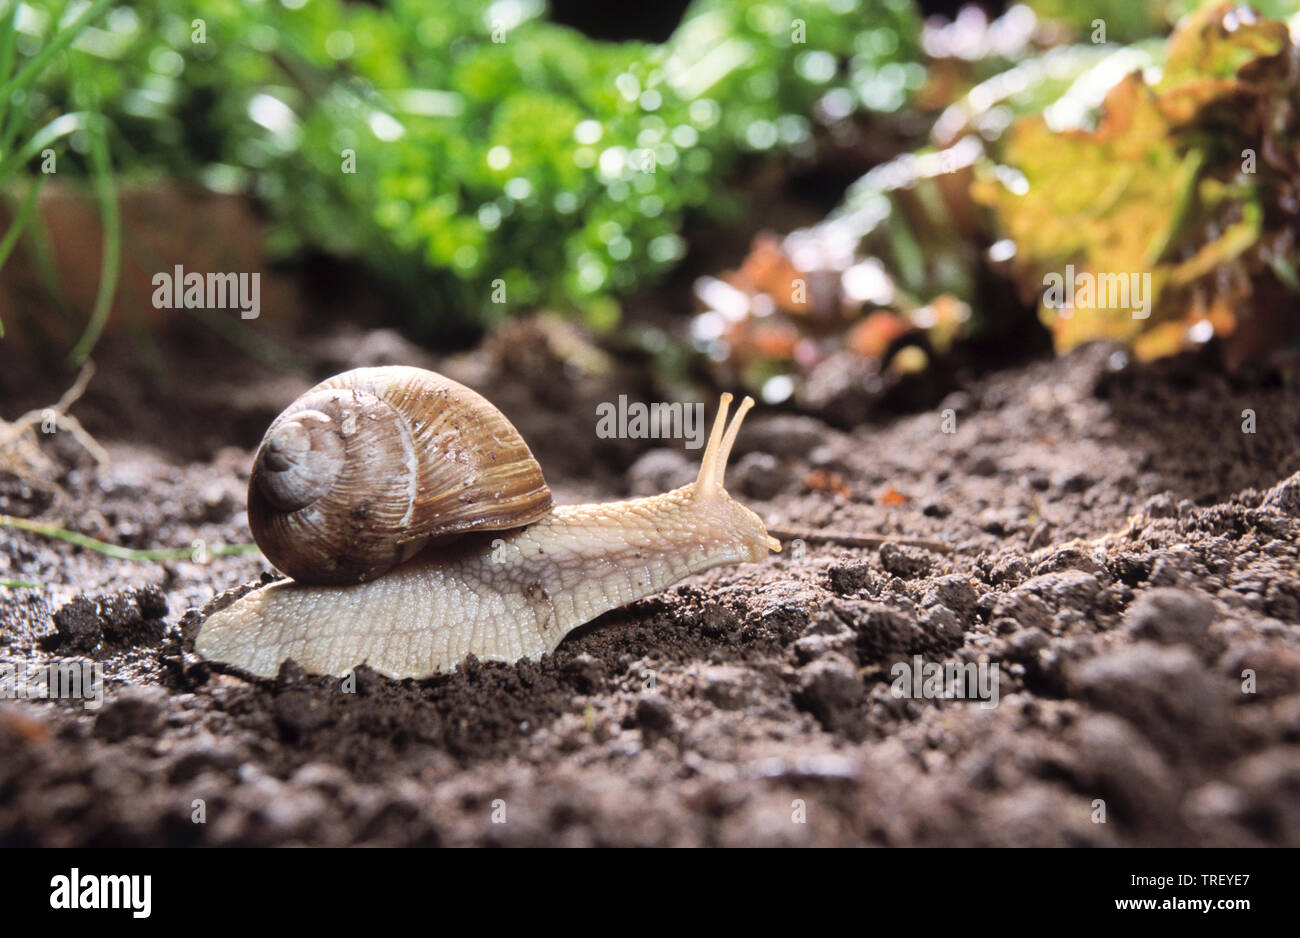 Roman Snail, Escargot, Edible Snail, Burgundy Snail (Helix pomatia) on soil. Germany Stock Photo